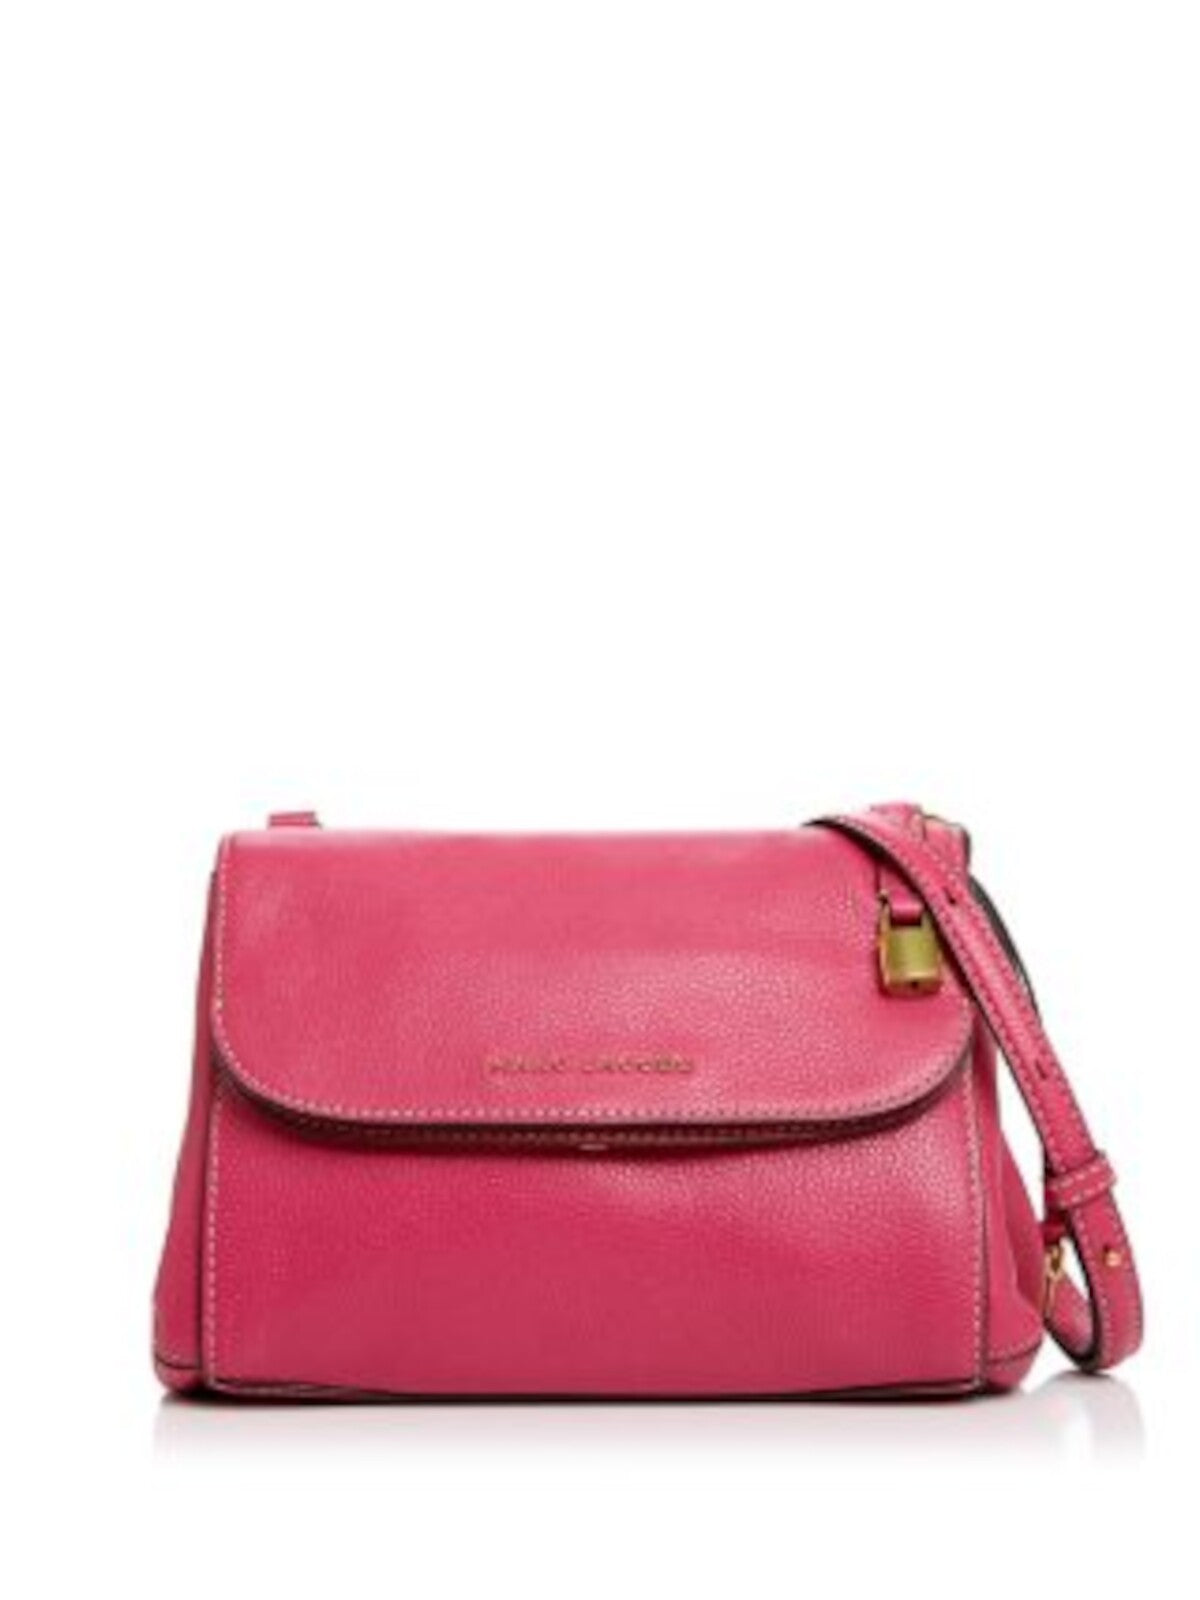 MARC JACOBS Women's Pink Solid Decorative Padlock Contrast Stitching Adjustable Strap Crossbody Handbag Purse